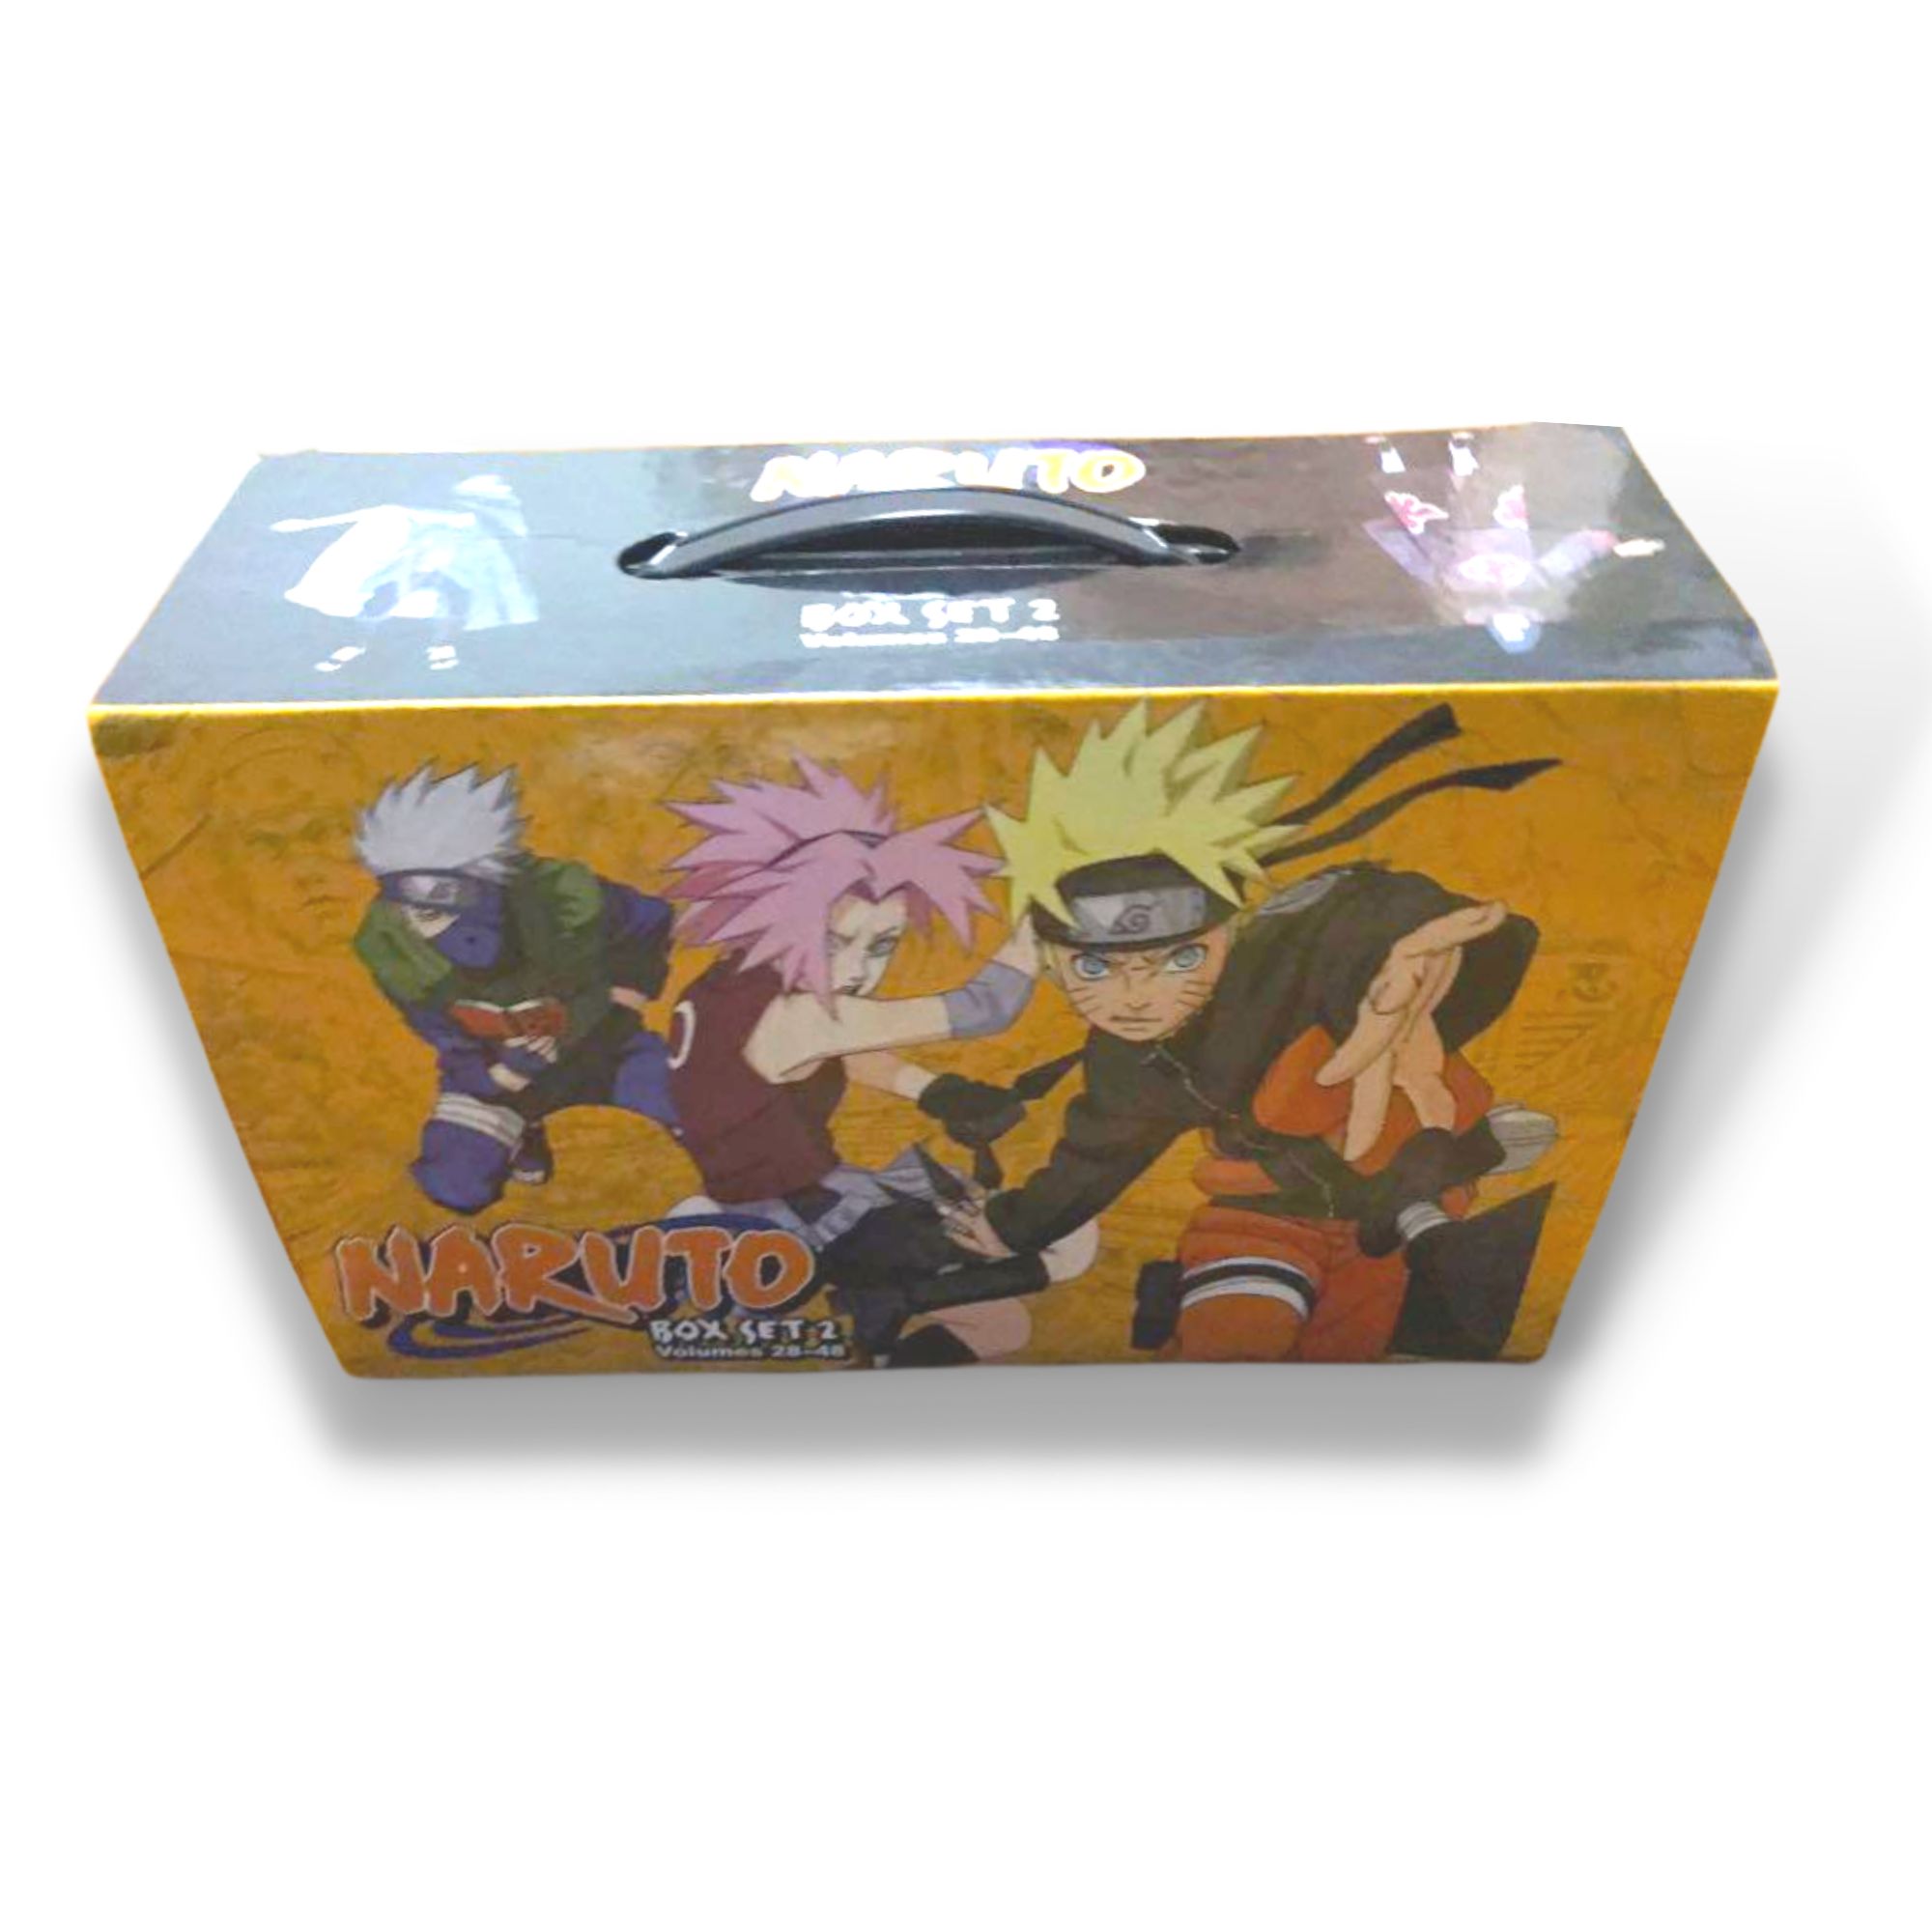 Naruto Box Set 2 - Geeekyme